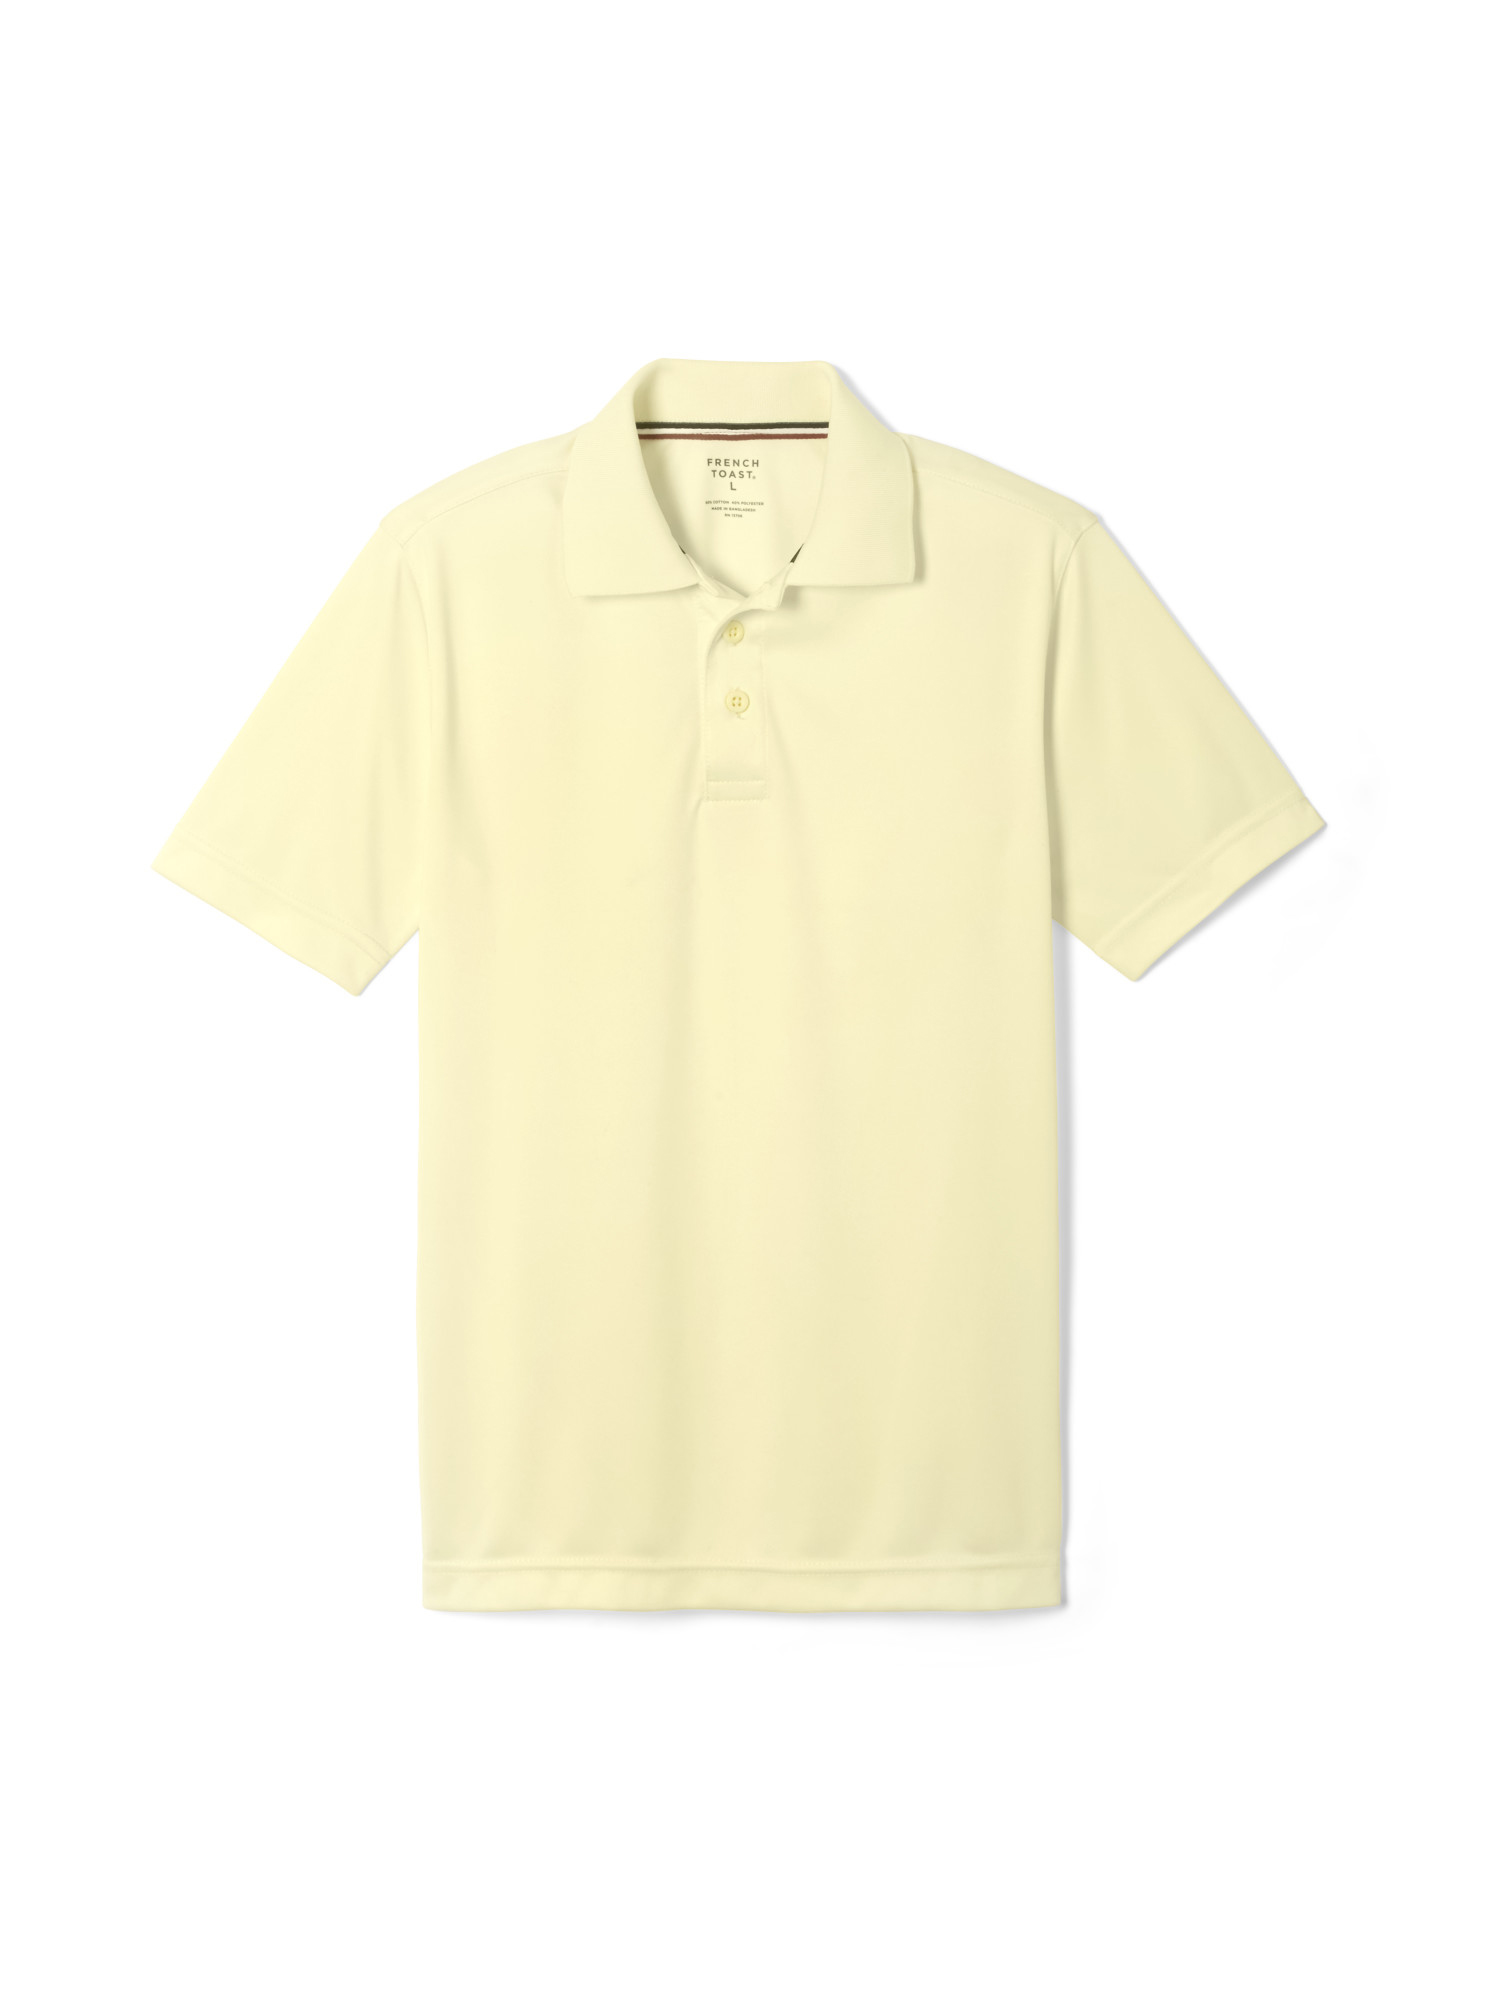 French Toast Boys 4-20 School Uniform Short Sleeve Stretch Moisture Wicking Polo Shirt - image 1 of 2